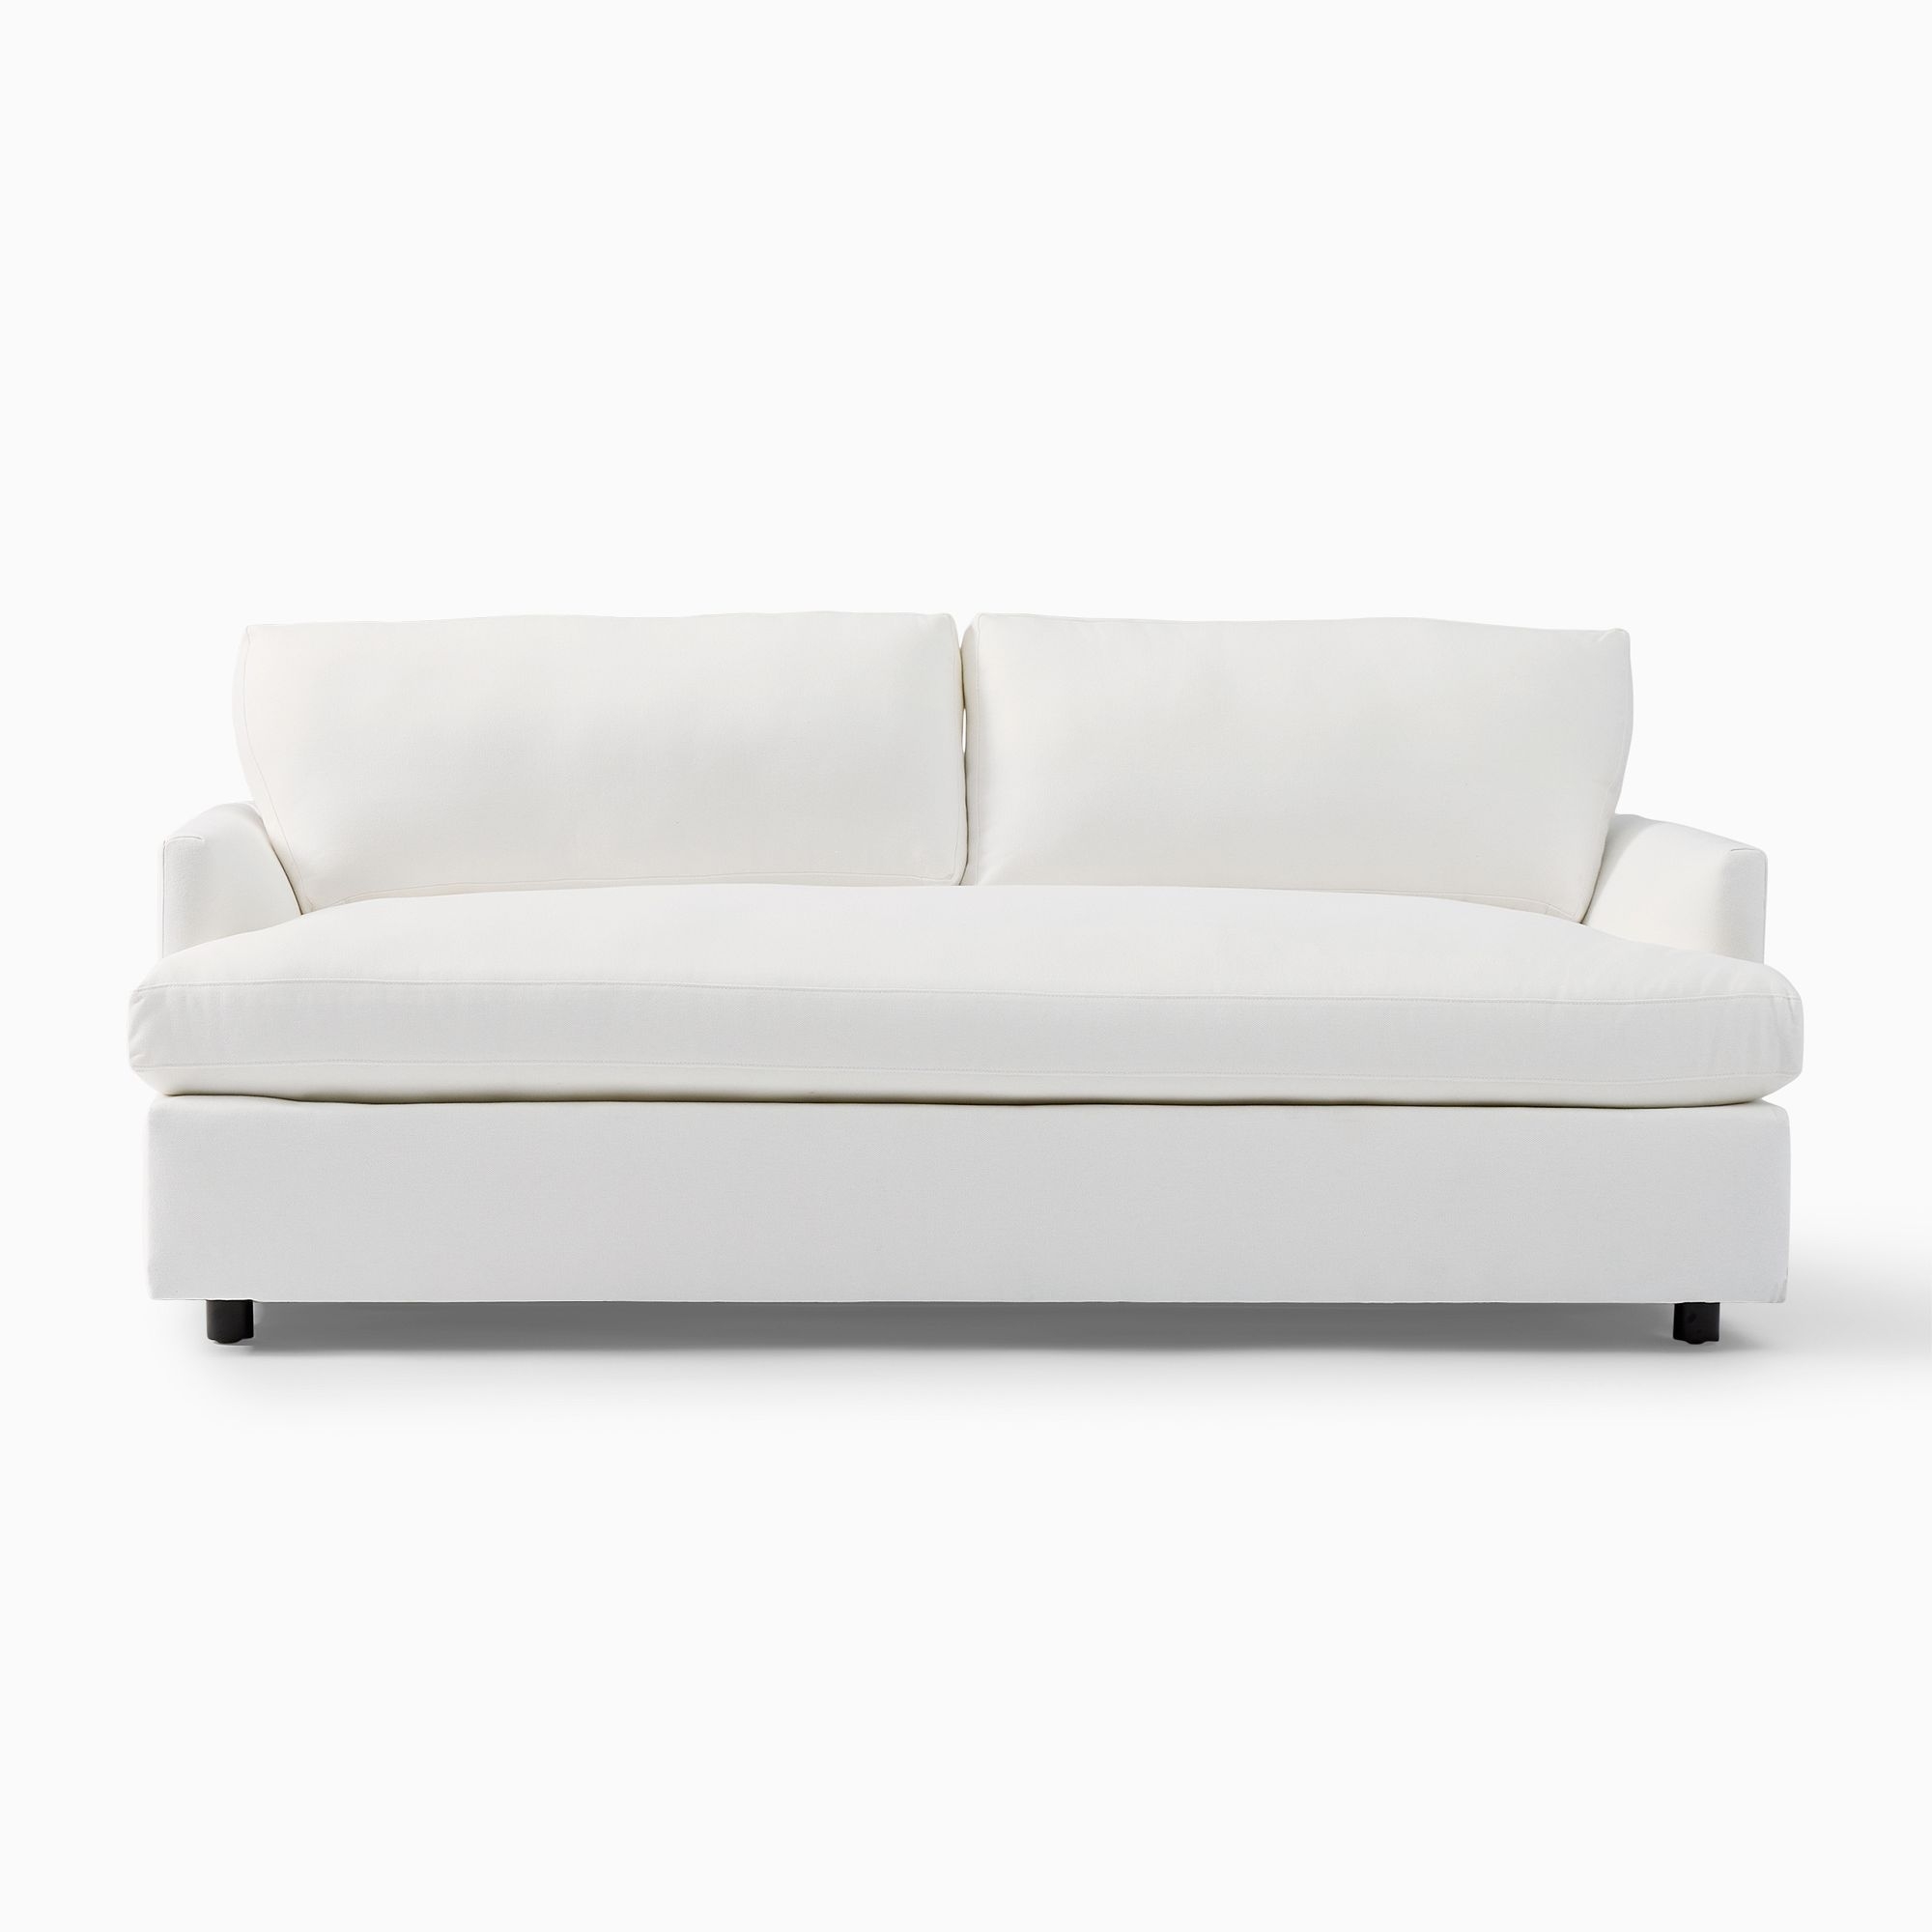 Haven 79" Sleeper Sofa, Performance Washed Canvas, White - Image 6